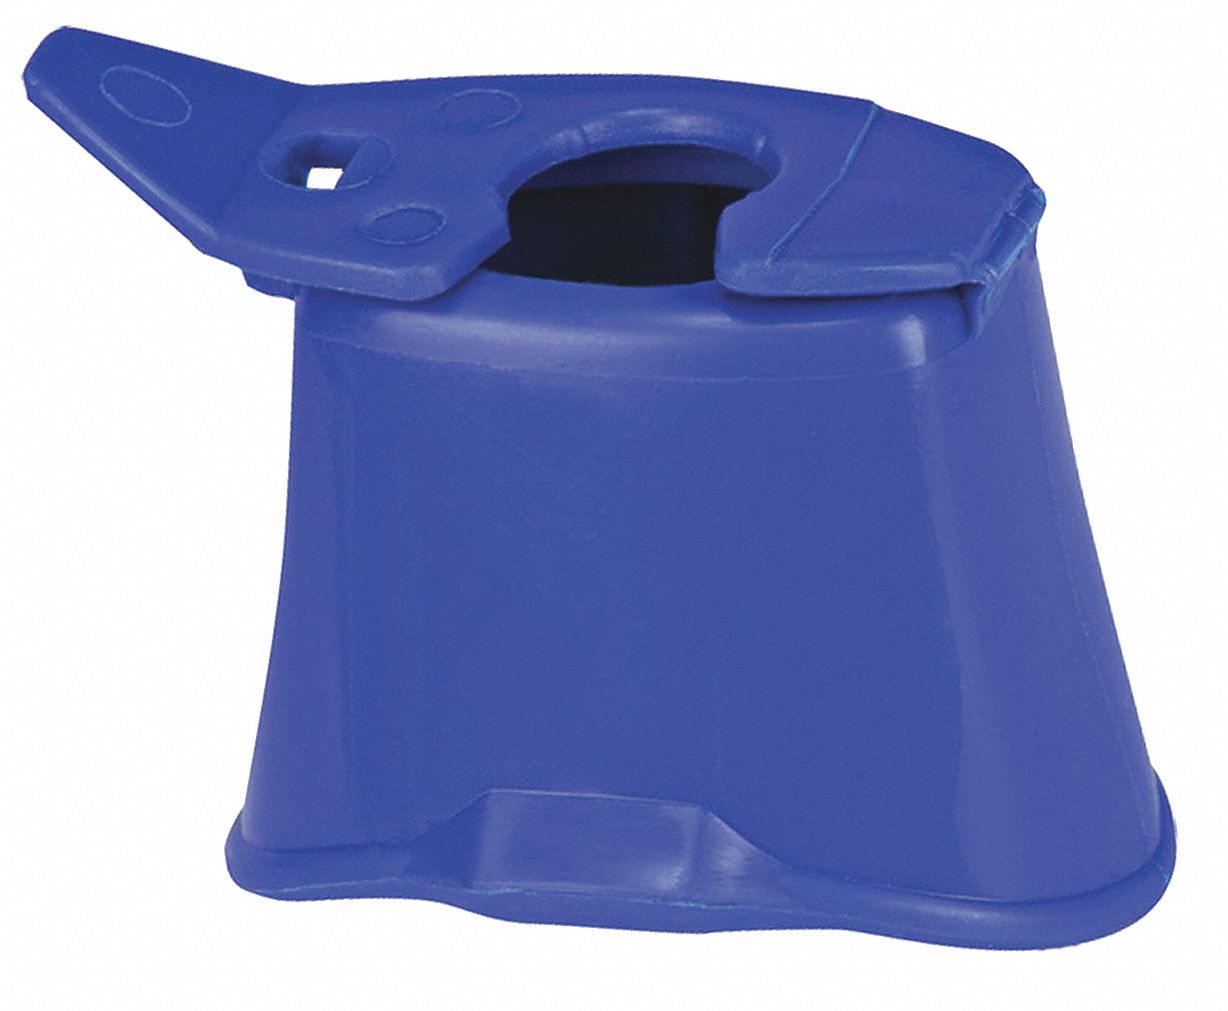 36ED57 - Eye Drop Kit Blue Plstic